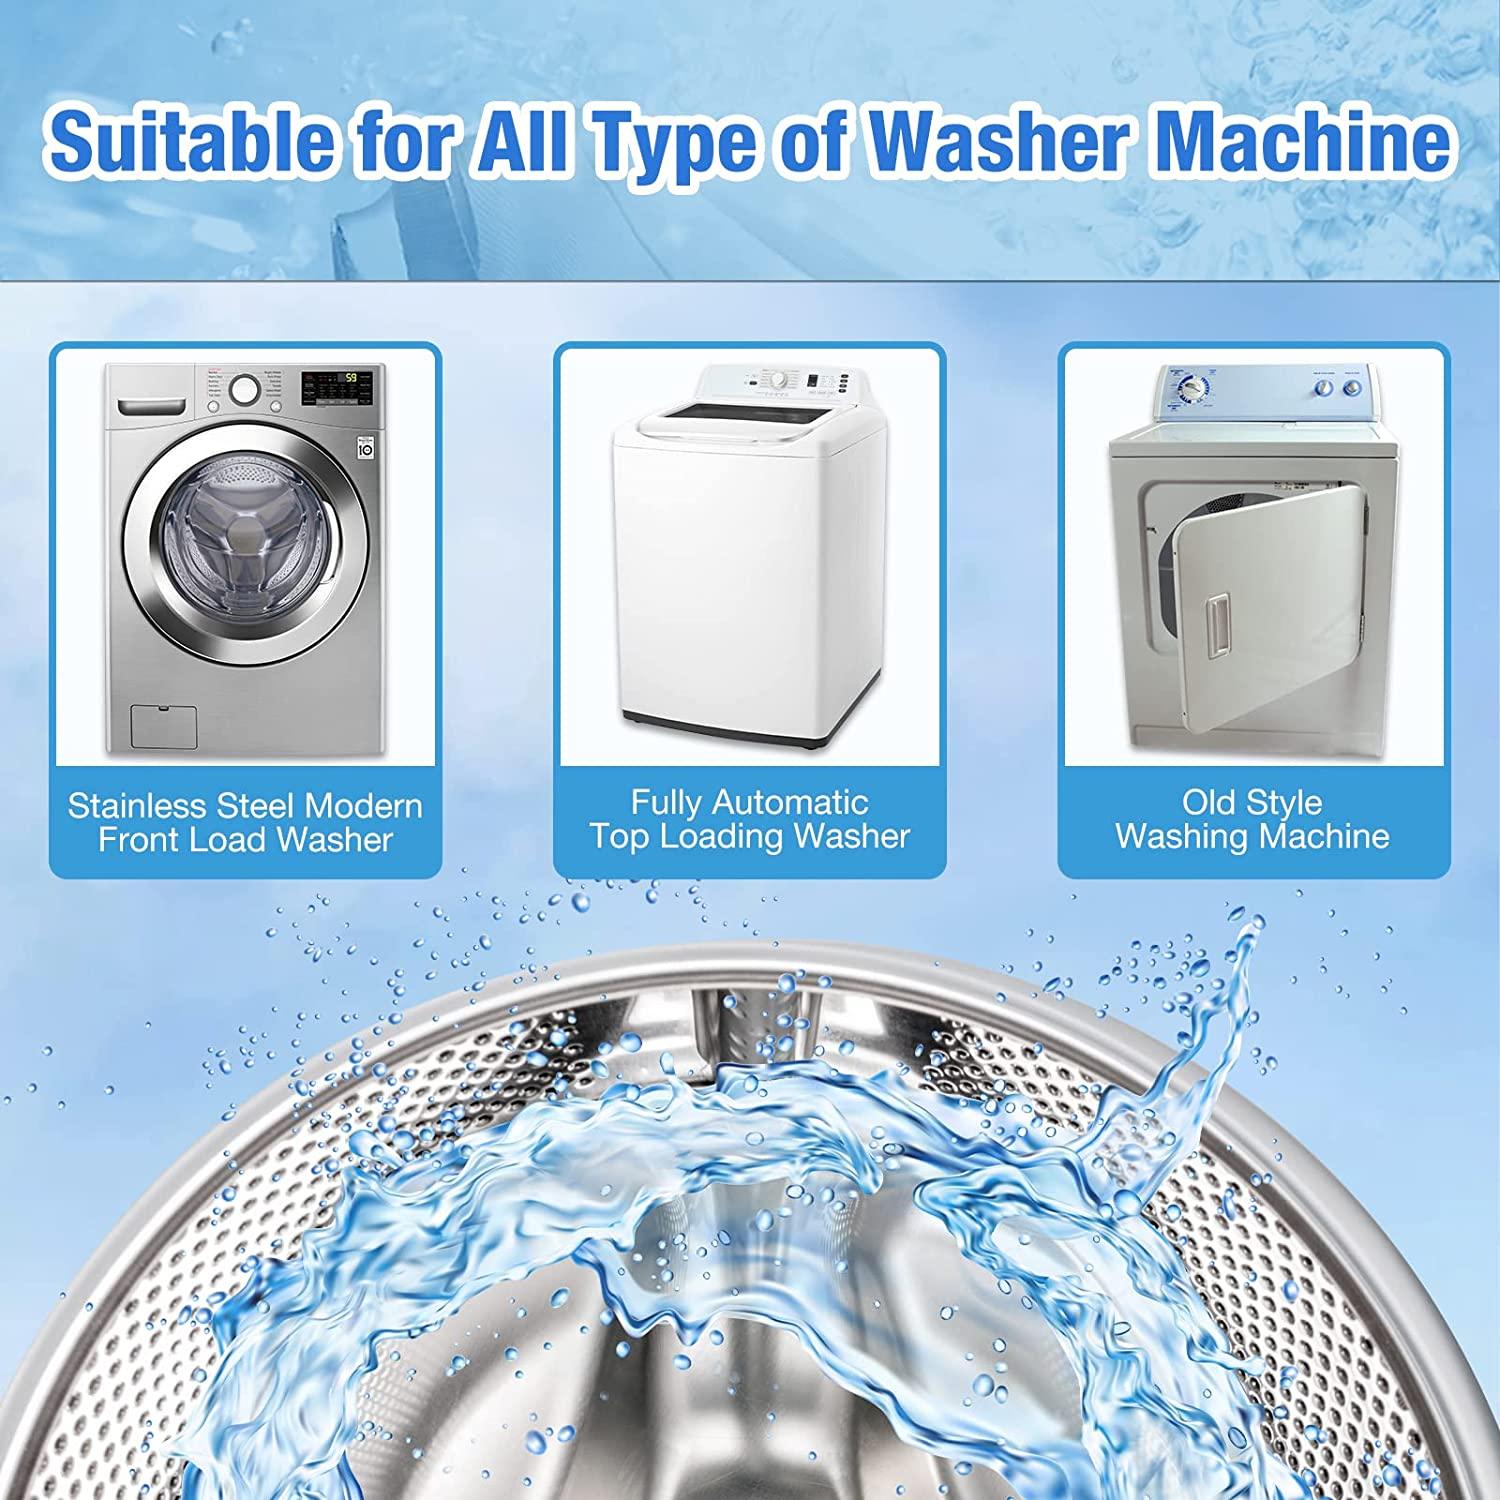 Buy Dcalcifer Washing Machine Cleaner Tablet (500g) Descale